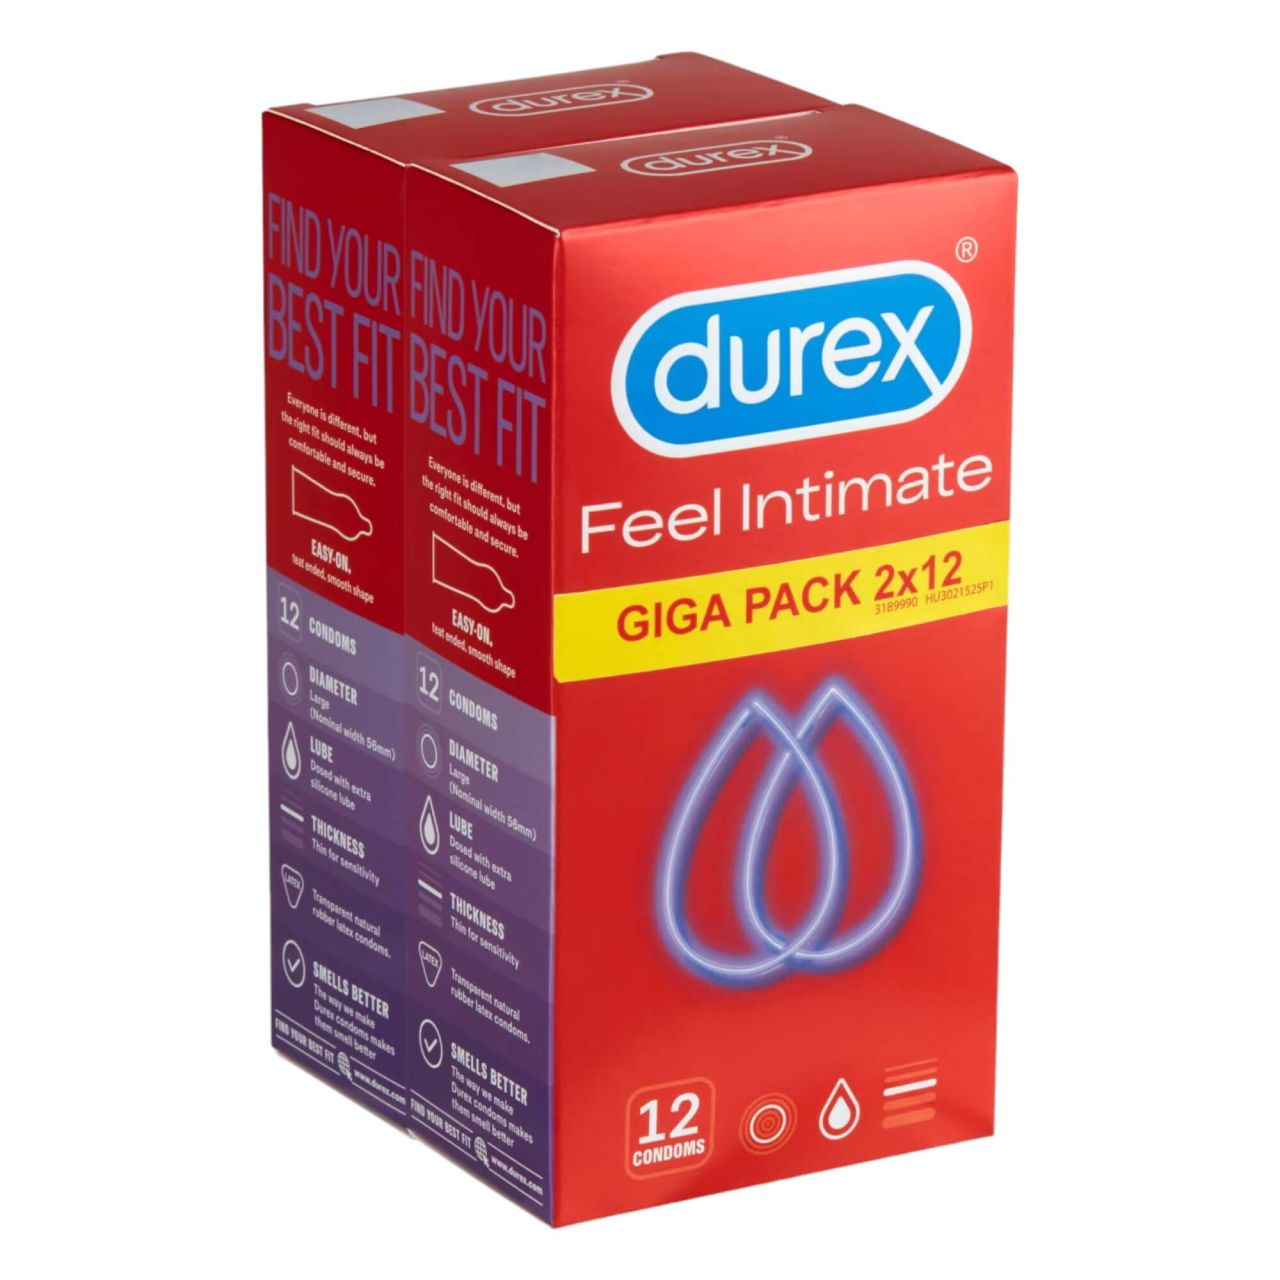 Durex Feel Intimate - vékonyfalú óvszer csomag (2x12db)